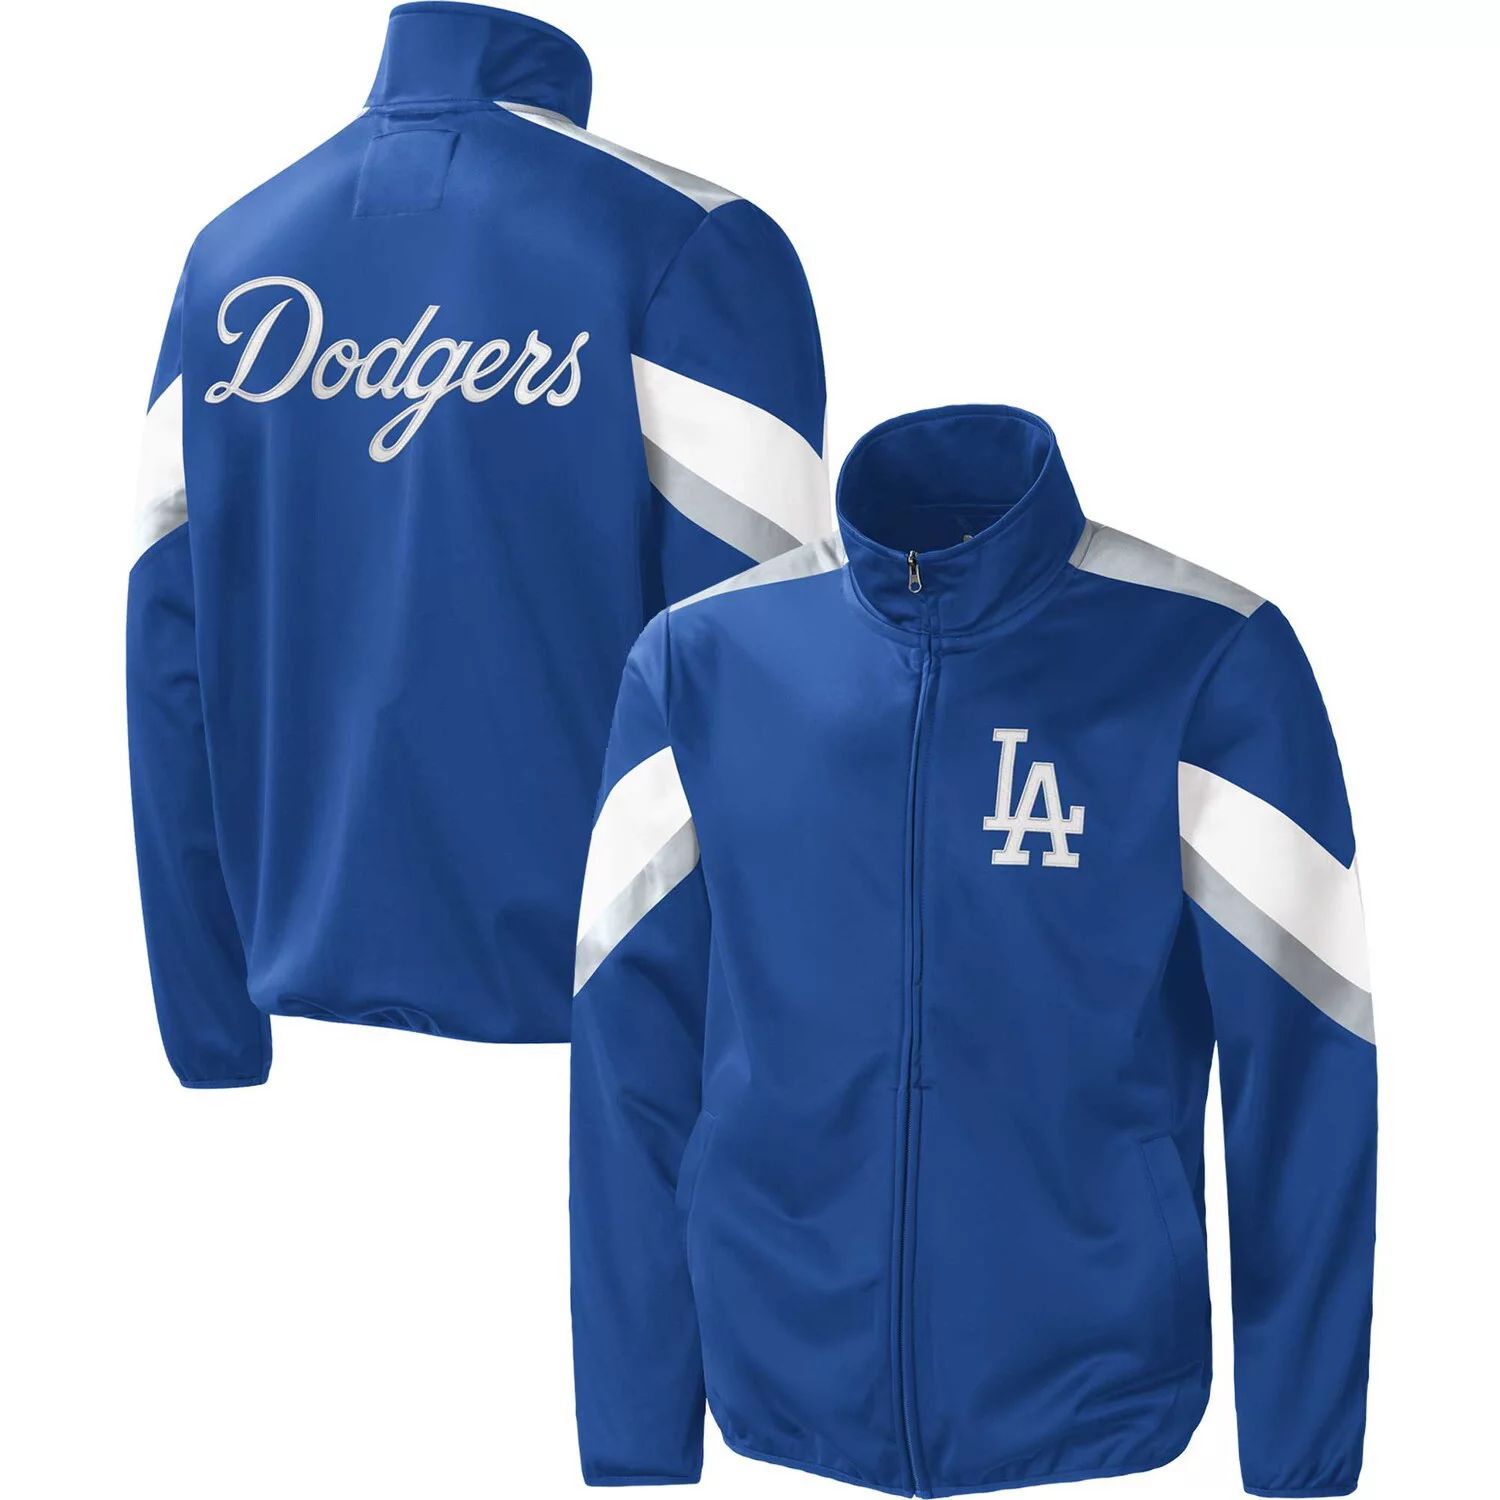 Мужская спортивная куртка Carl Banks Royal Los Angeles Dodgers Earned Run с молнией во всю длину G-III